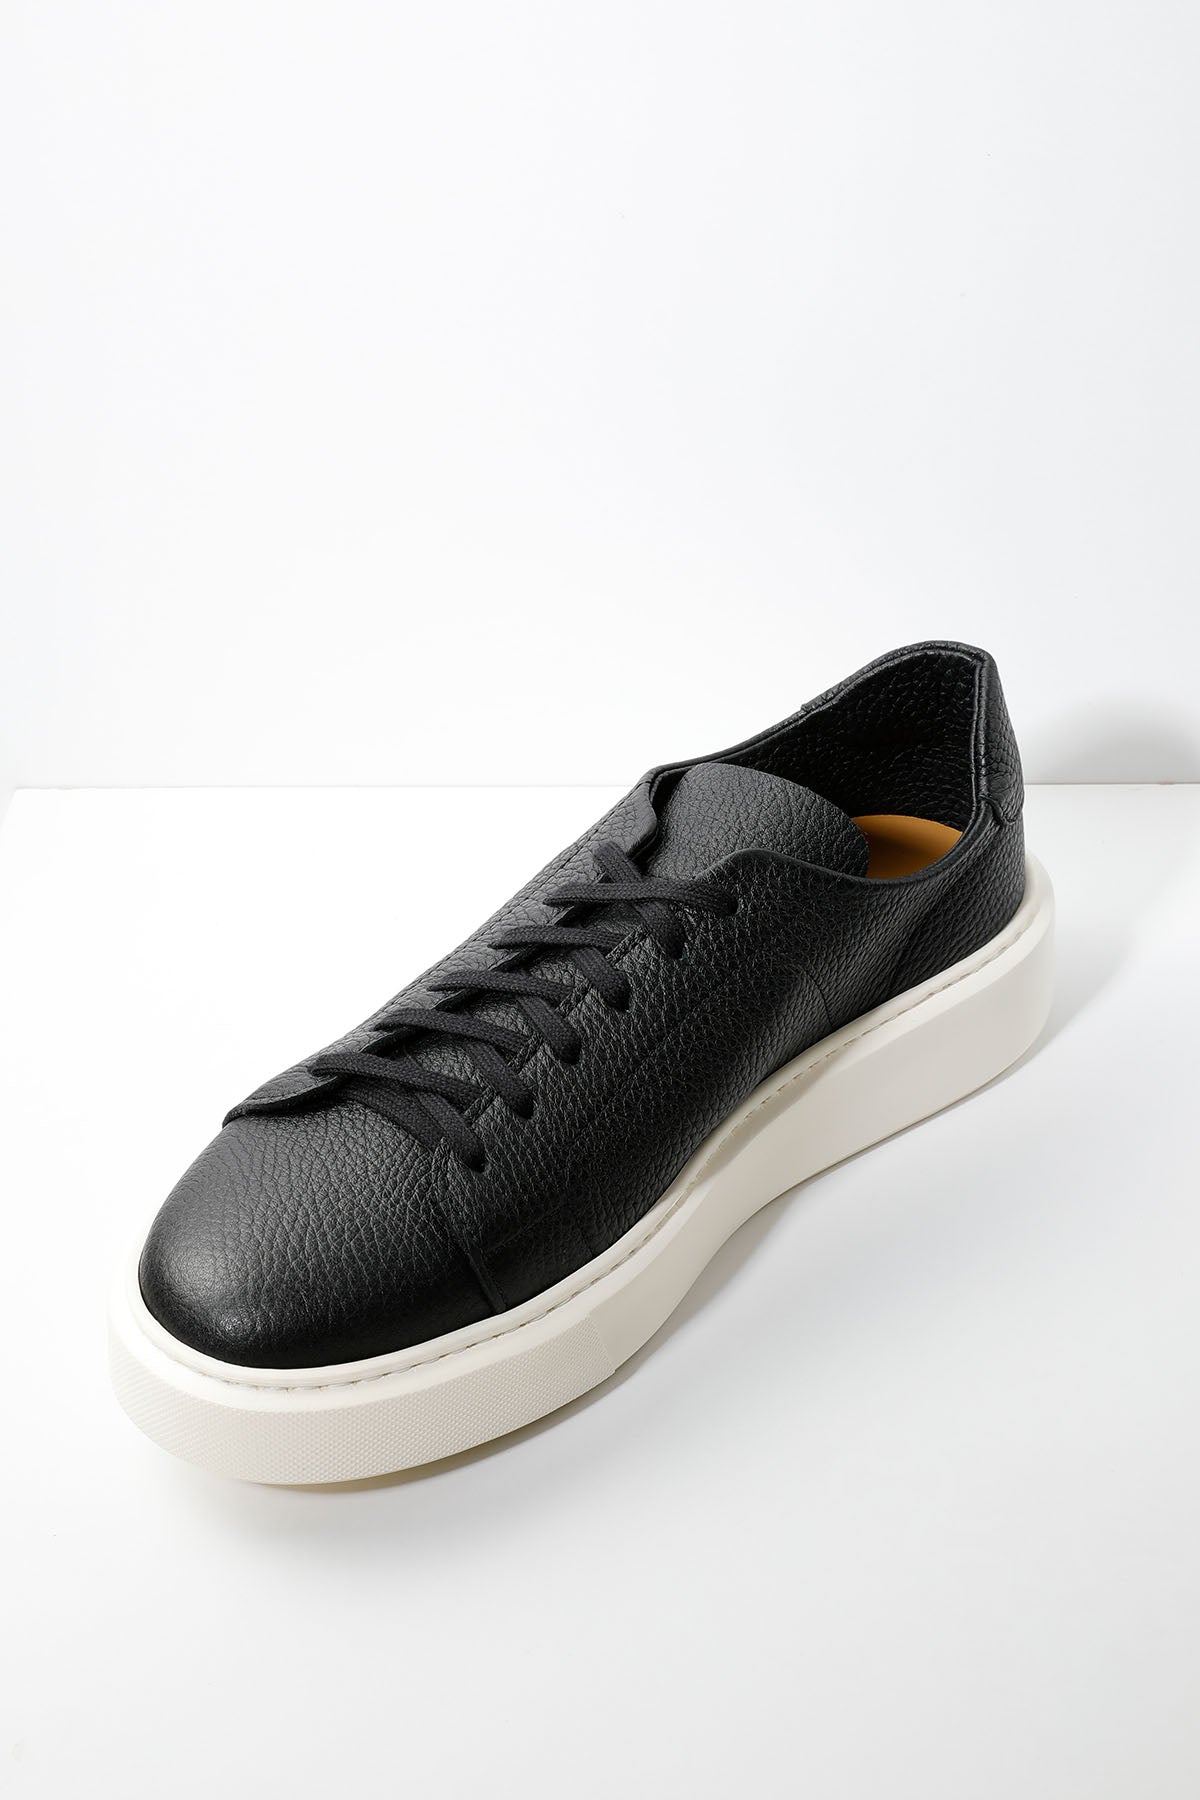 Henderson Chronos Extralight Deri Sneaker Ayakkabı-Libas Trendy Fashion Store